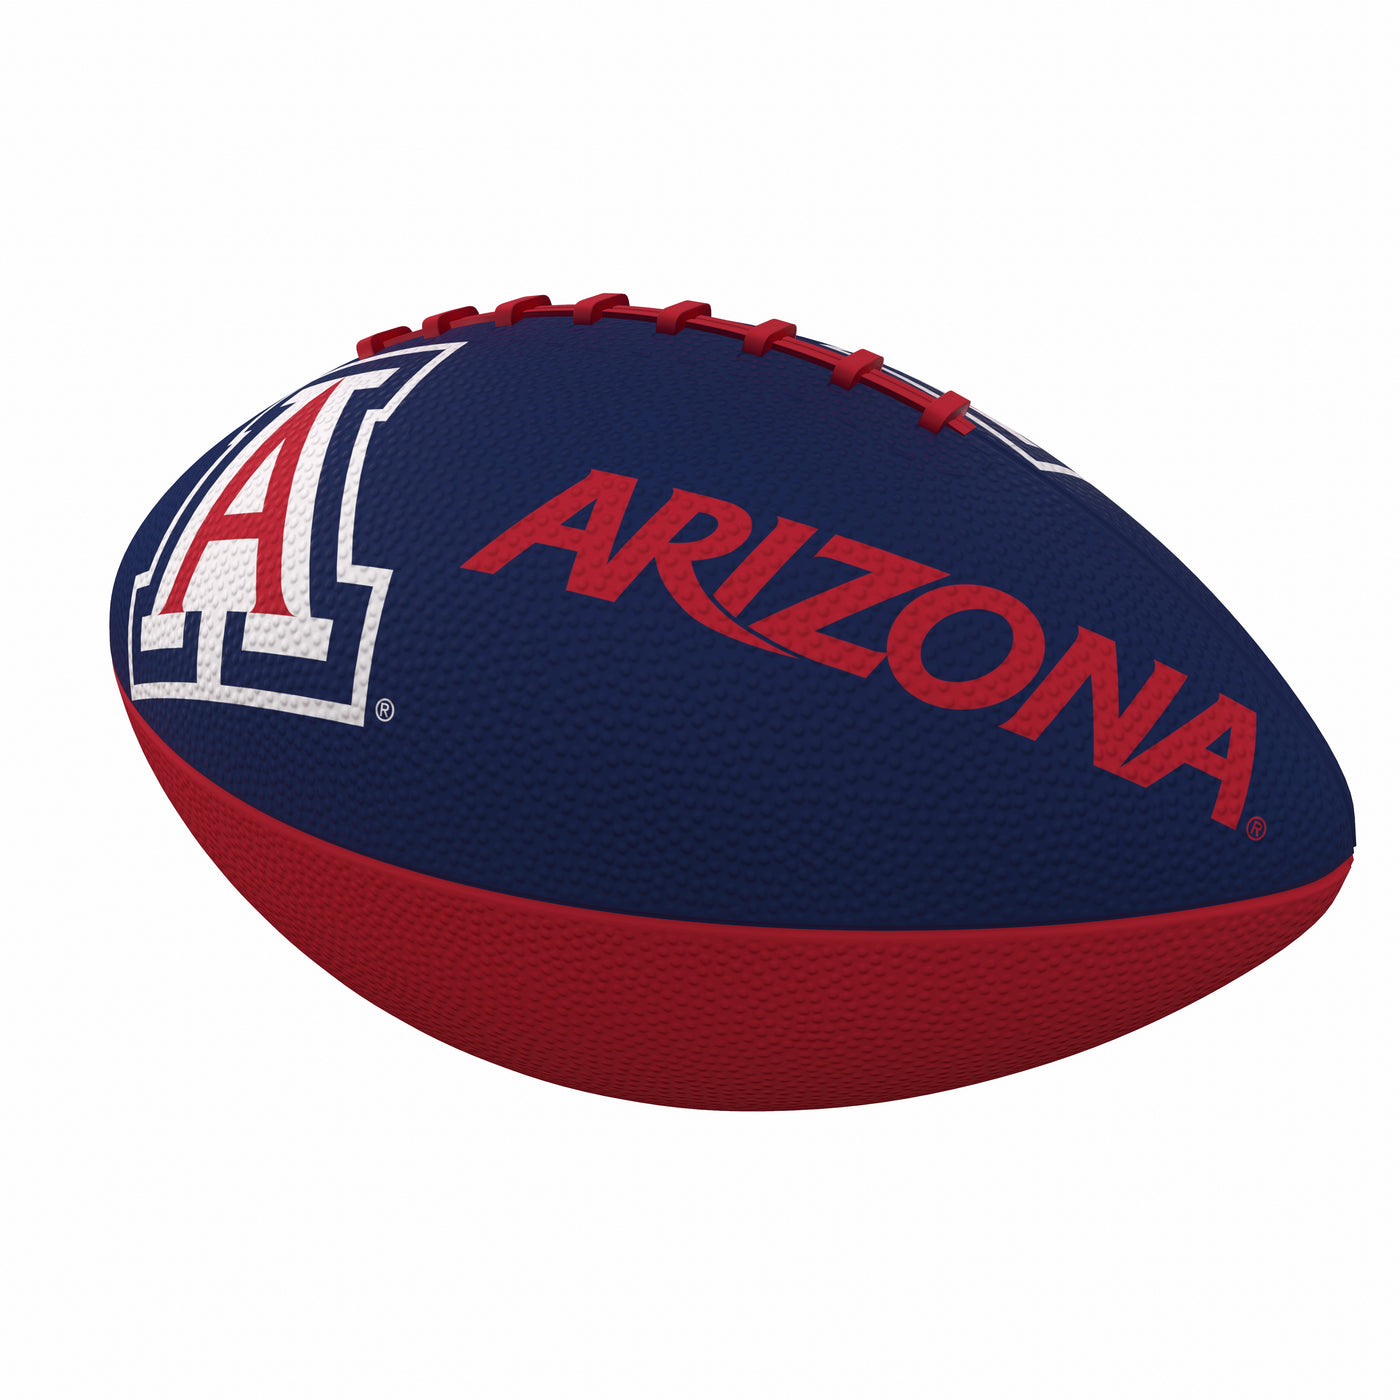 Arizona Combo Logo Junior-Size Rubber Football